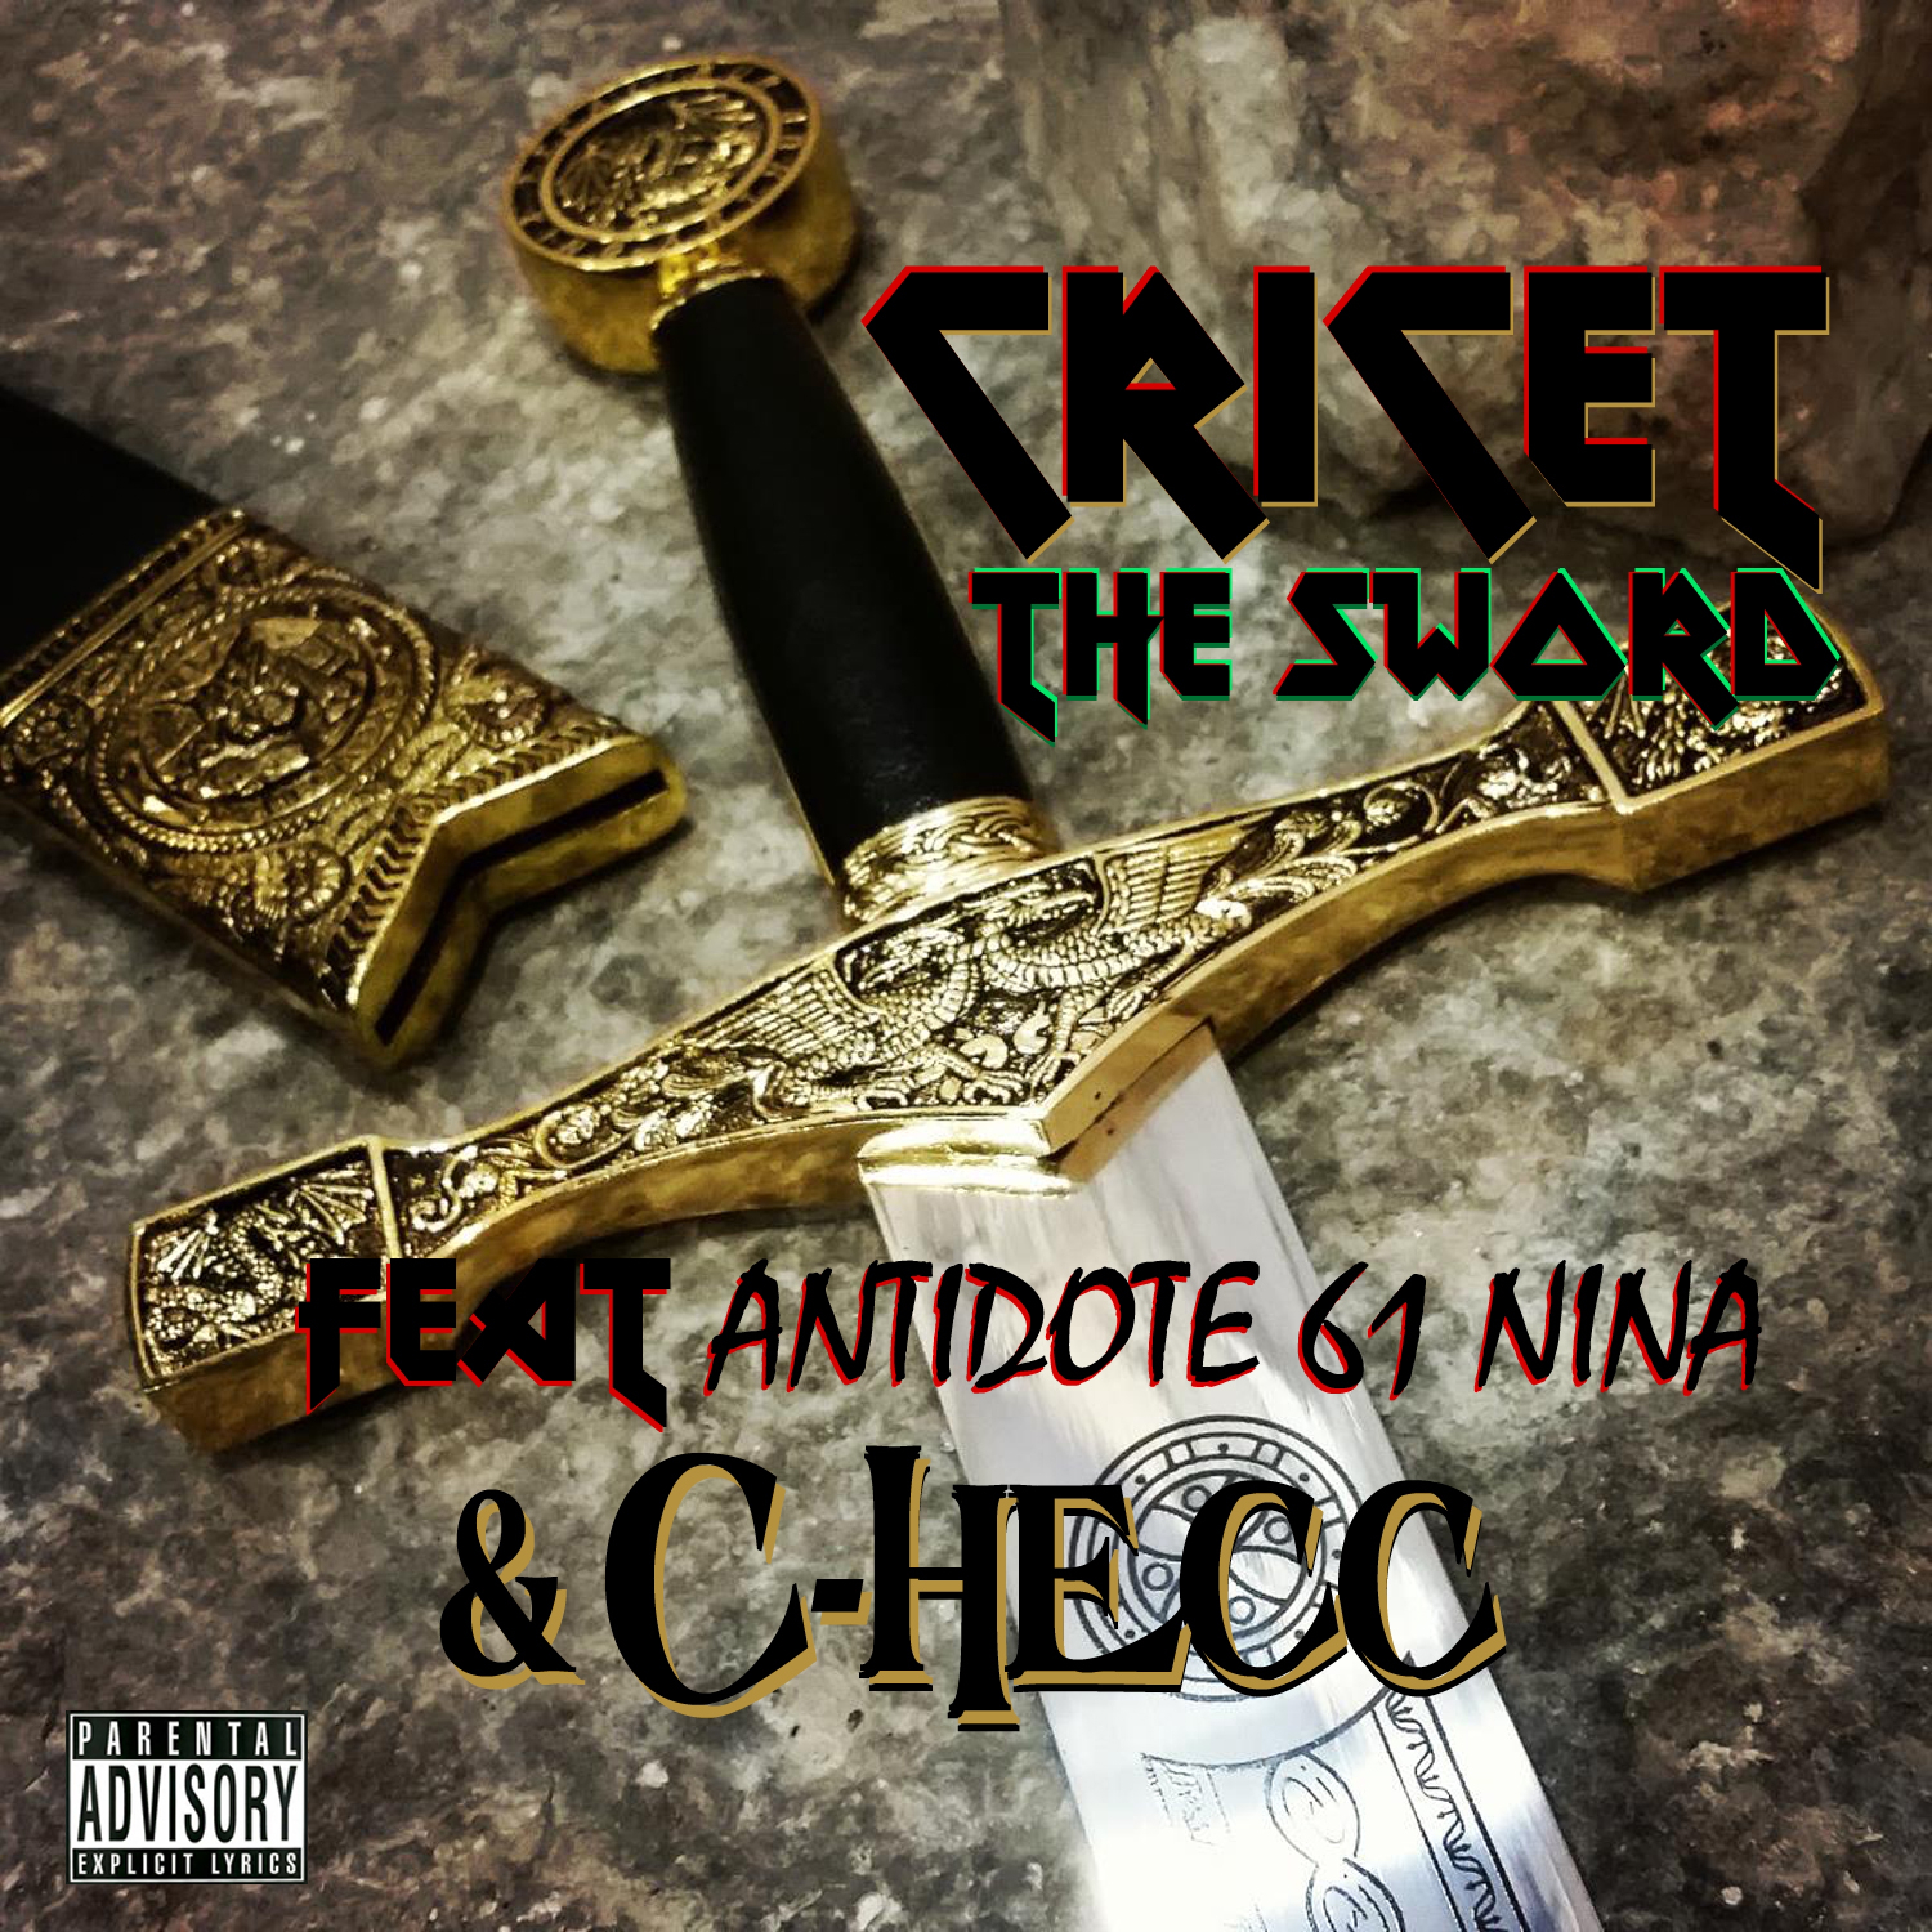 The Sword (feat. Antidote 61 Nina & C-Hecc)